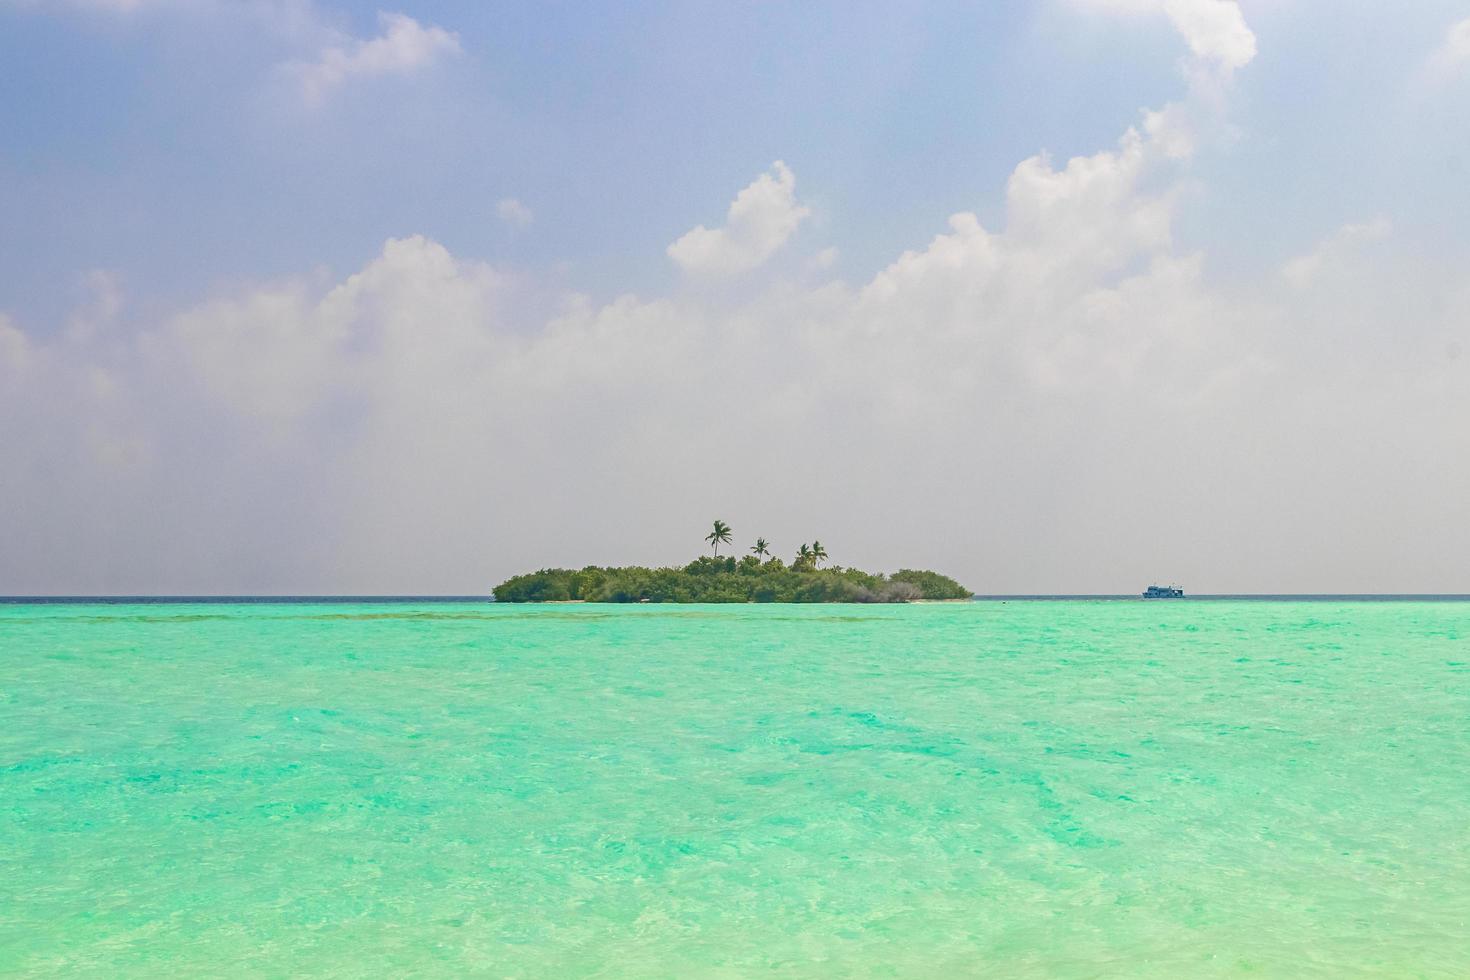 isole naturali tropicali turchesi banchi di sabbia madivaru finolhu atollo di rasdhoo maldive. foto